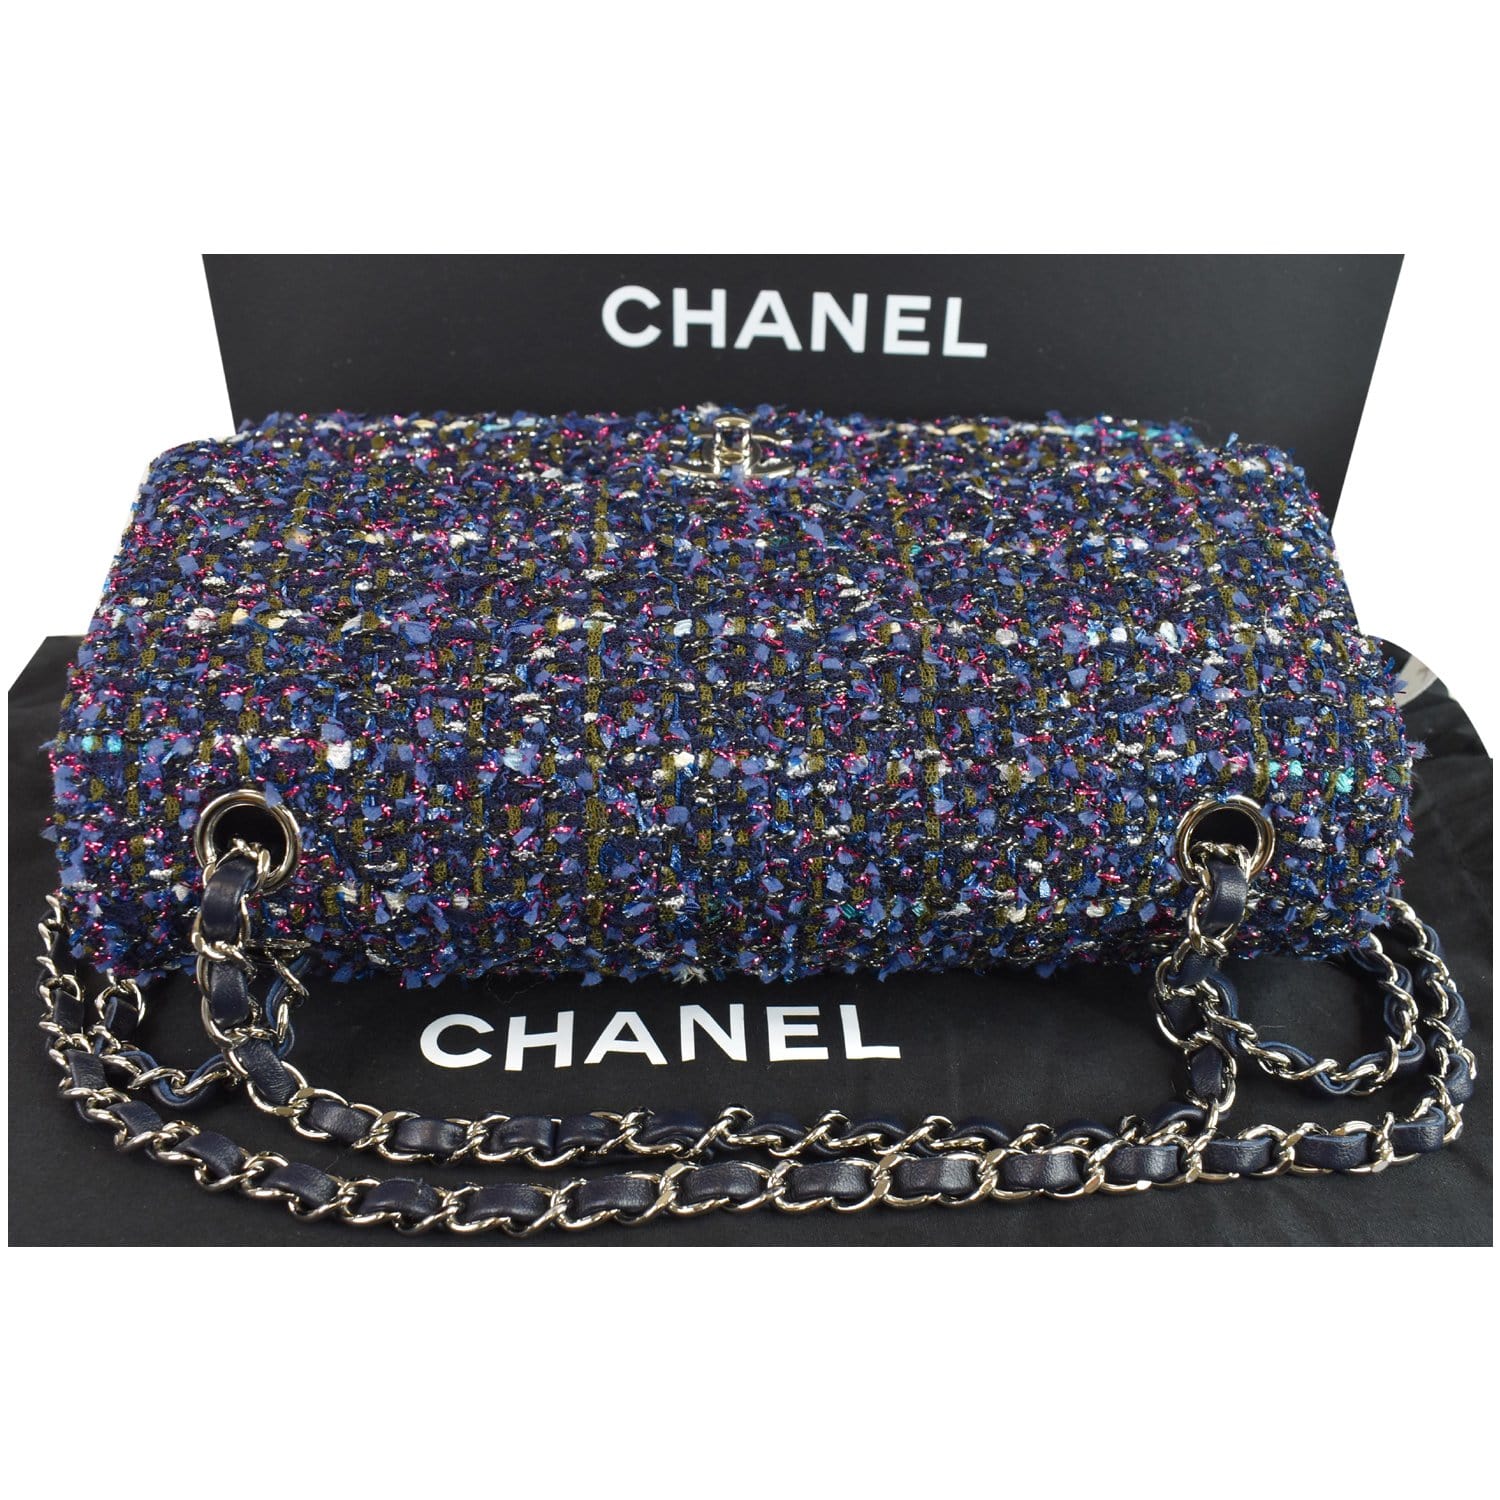 Chanel - Classic Flap Bag - Medium - Iridescent Champagne - 2021 - Brand New